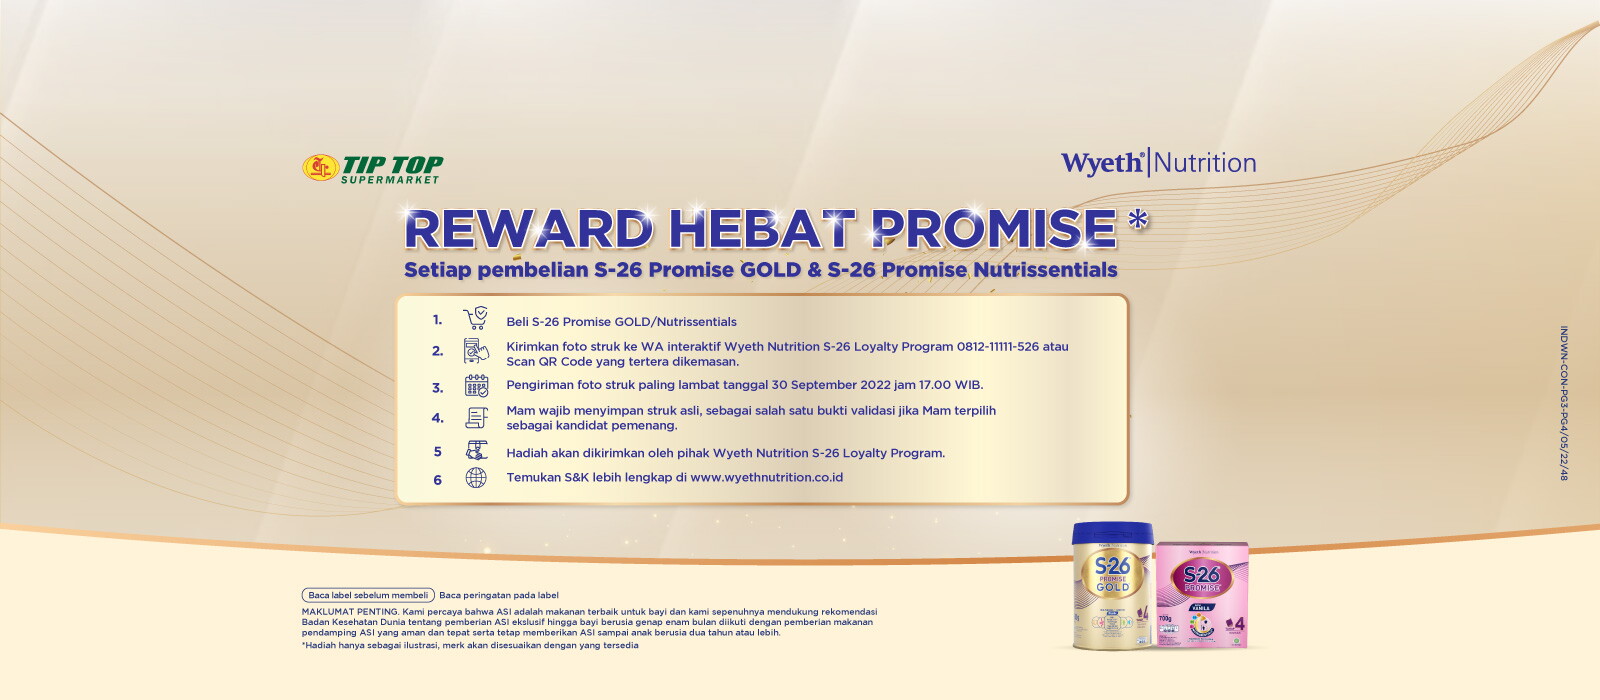 Reward Hebat Promise Tip Top Juli - September 2022